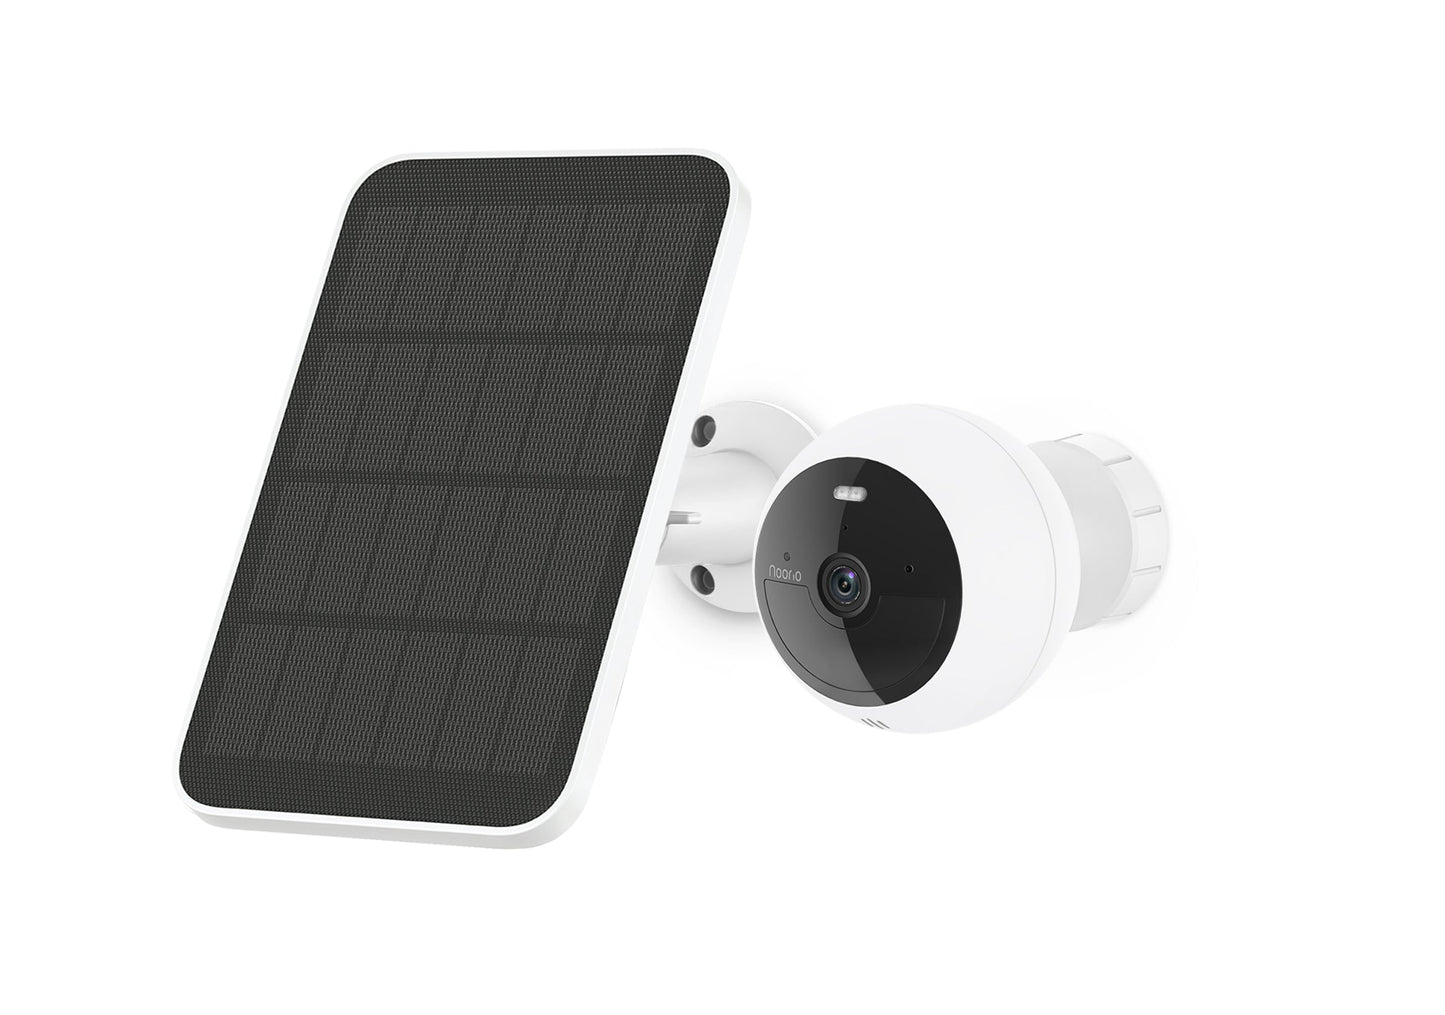 B210 Solar-Powered Security System: Easy Setup, 2K HD, Night Vision, 16GB Storage, Alexa-Compatible